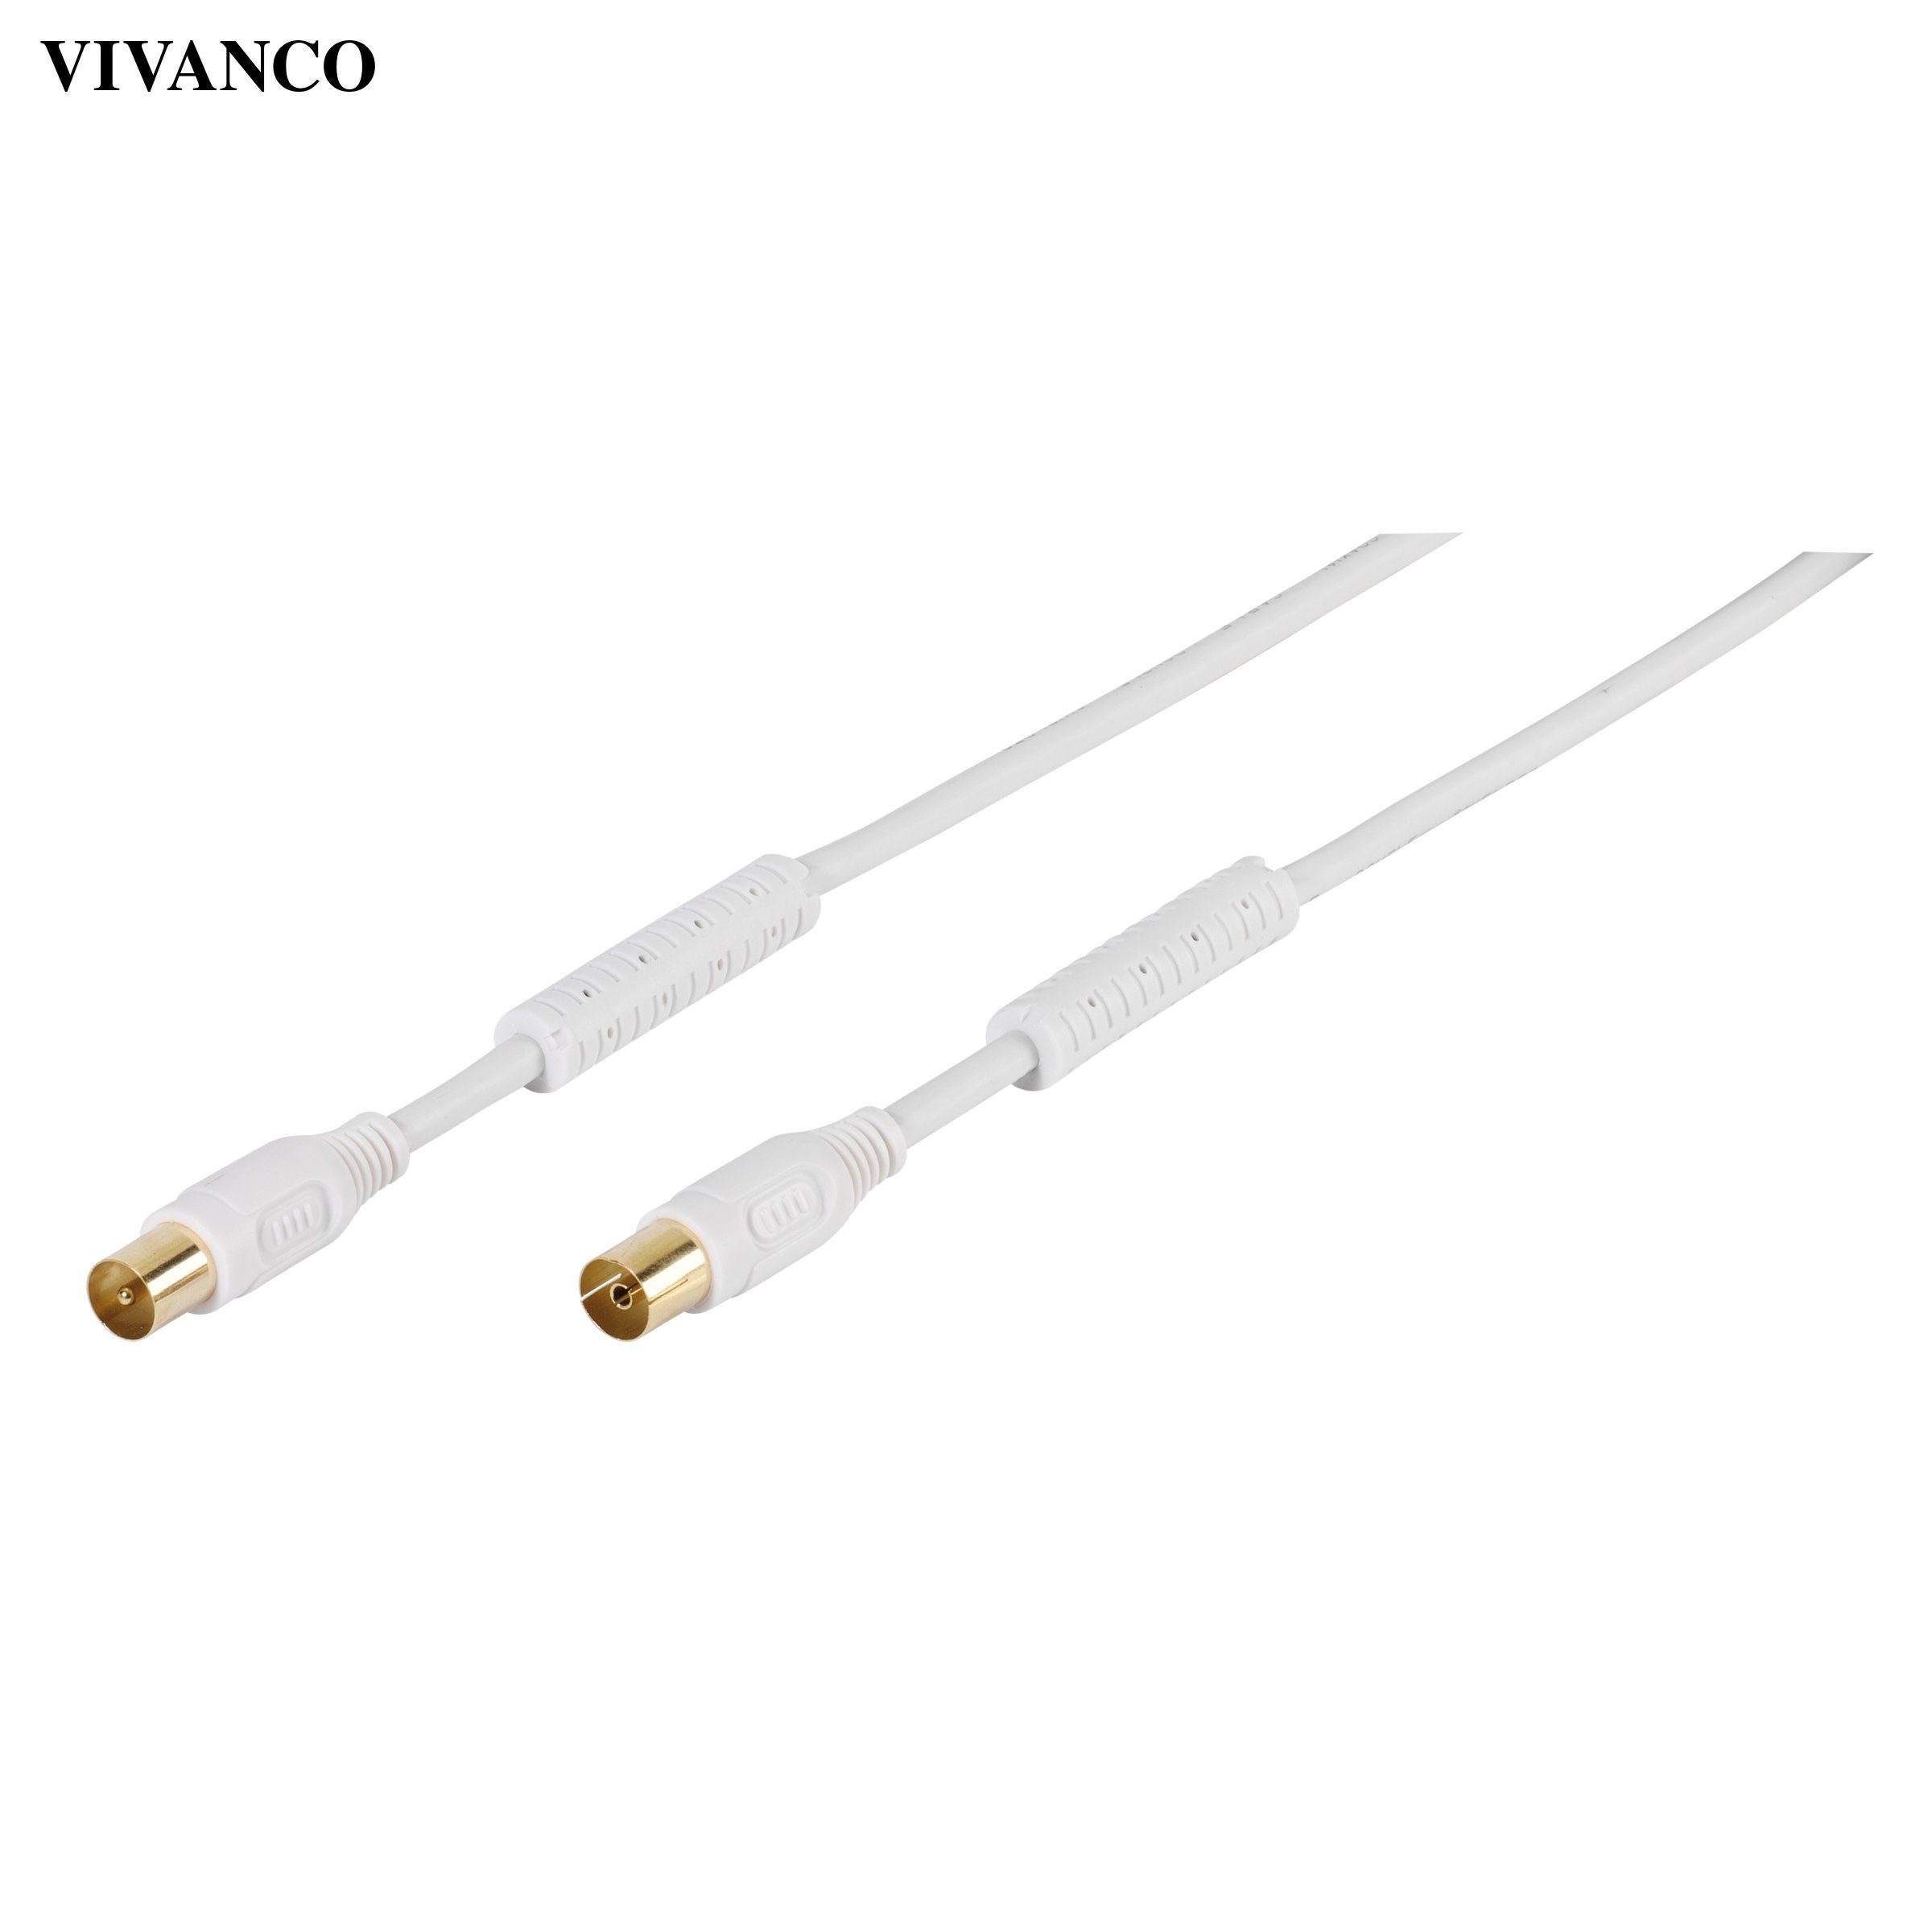 Vivanco Video-Kabel, Antennenkabel, vergoldet, 100dB